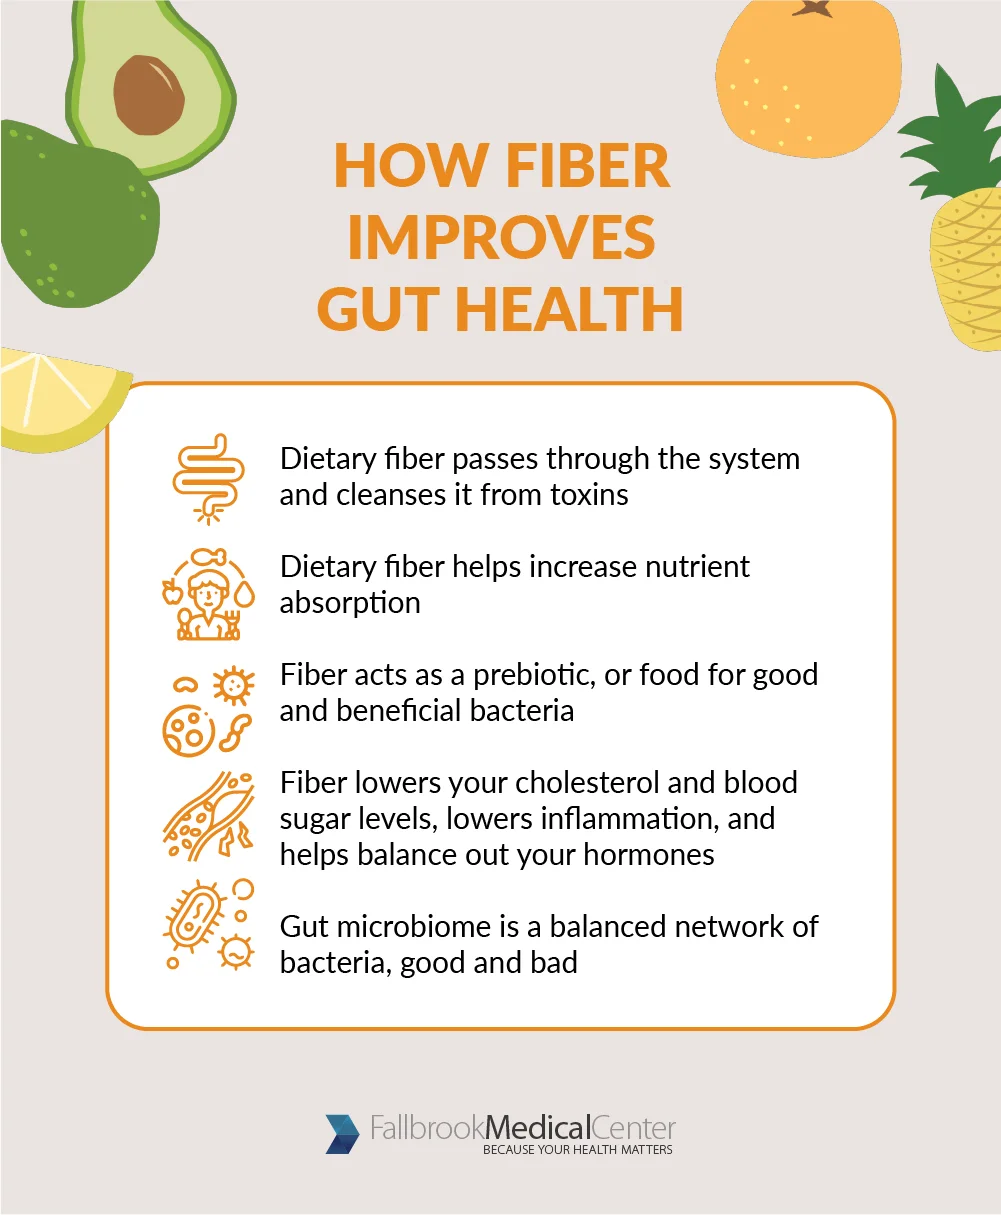 How Fiber Improves Gut Health?